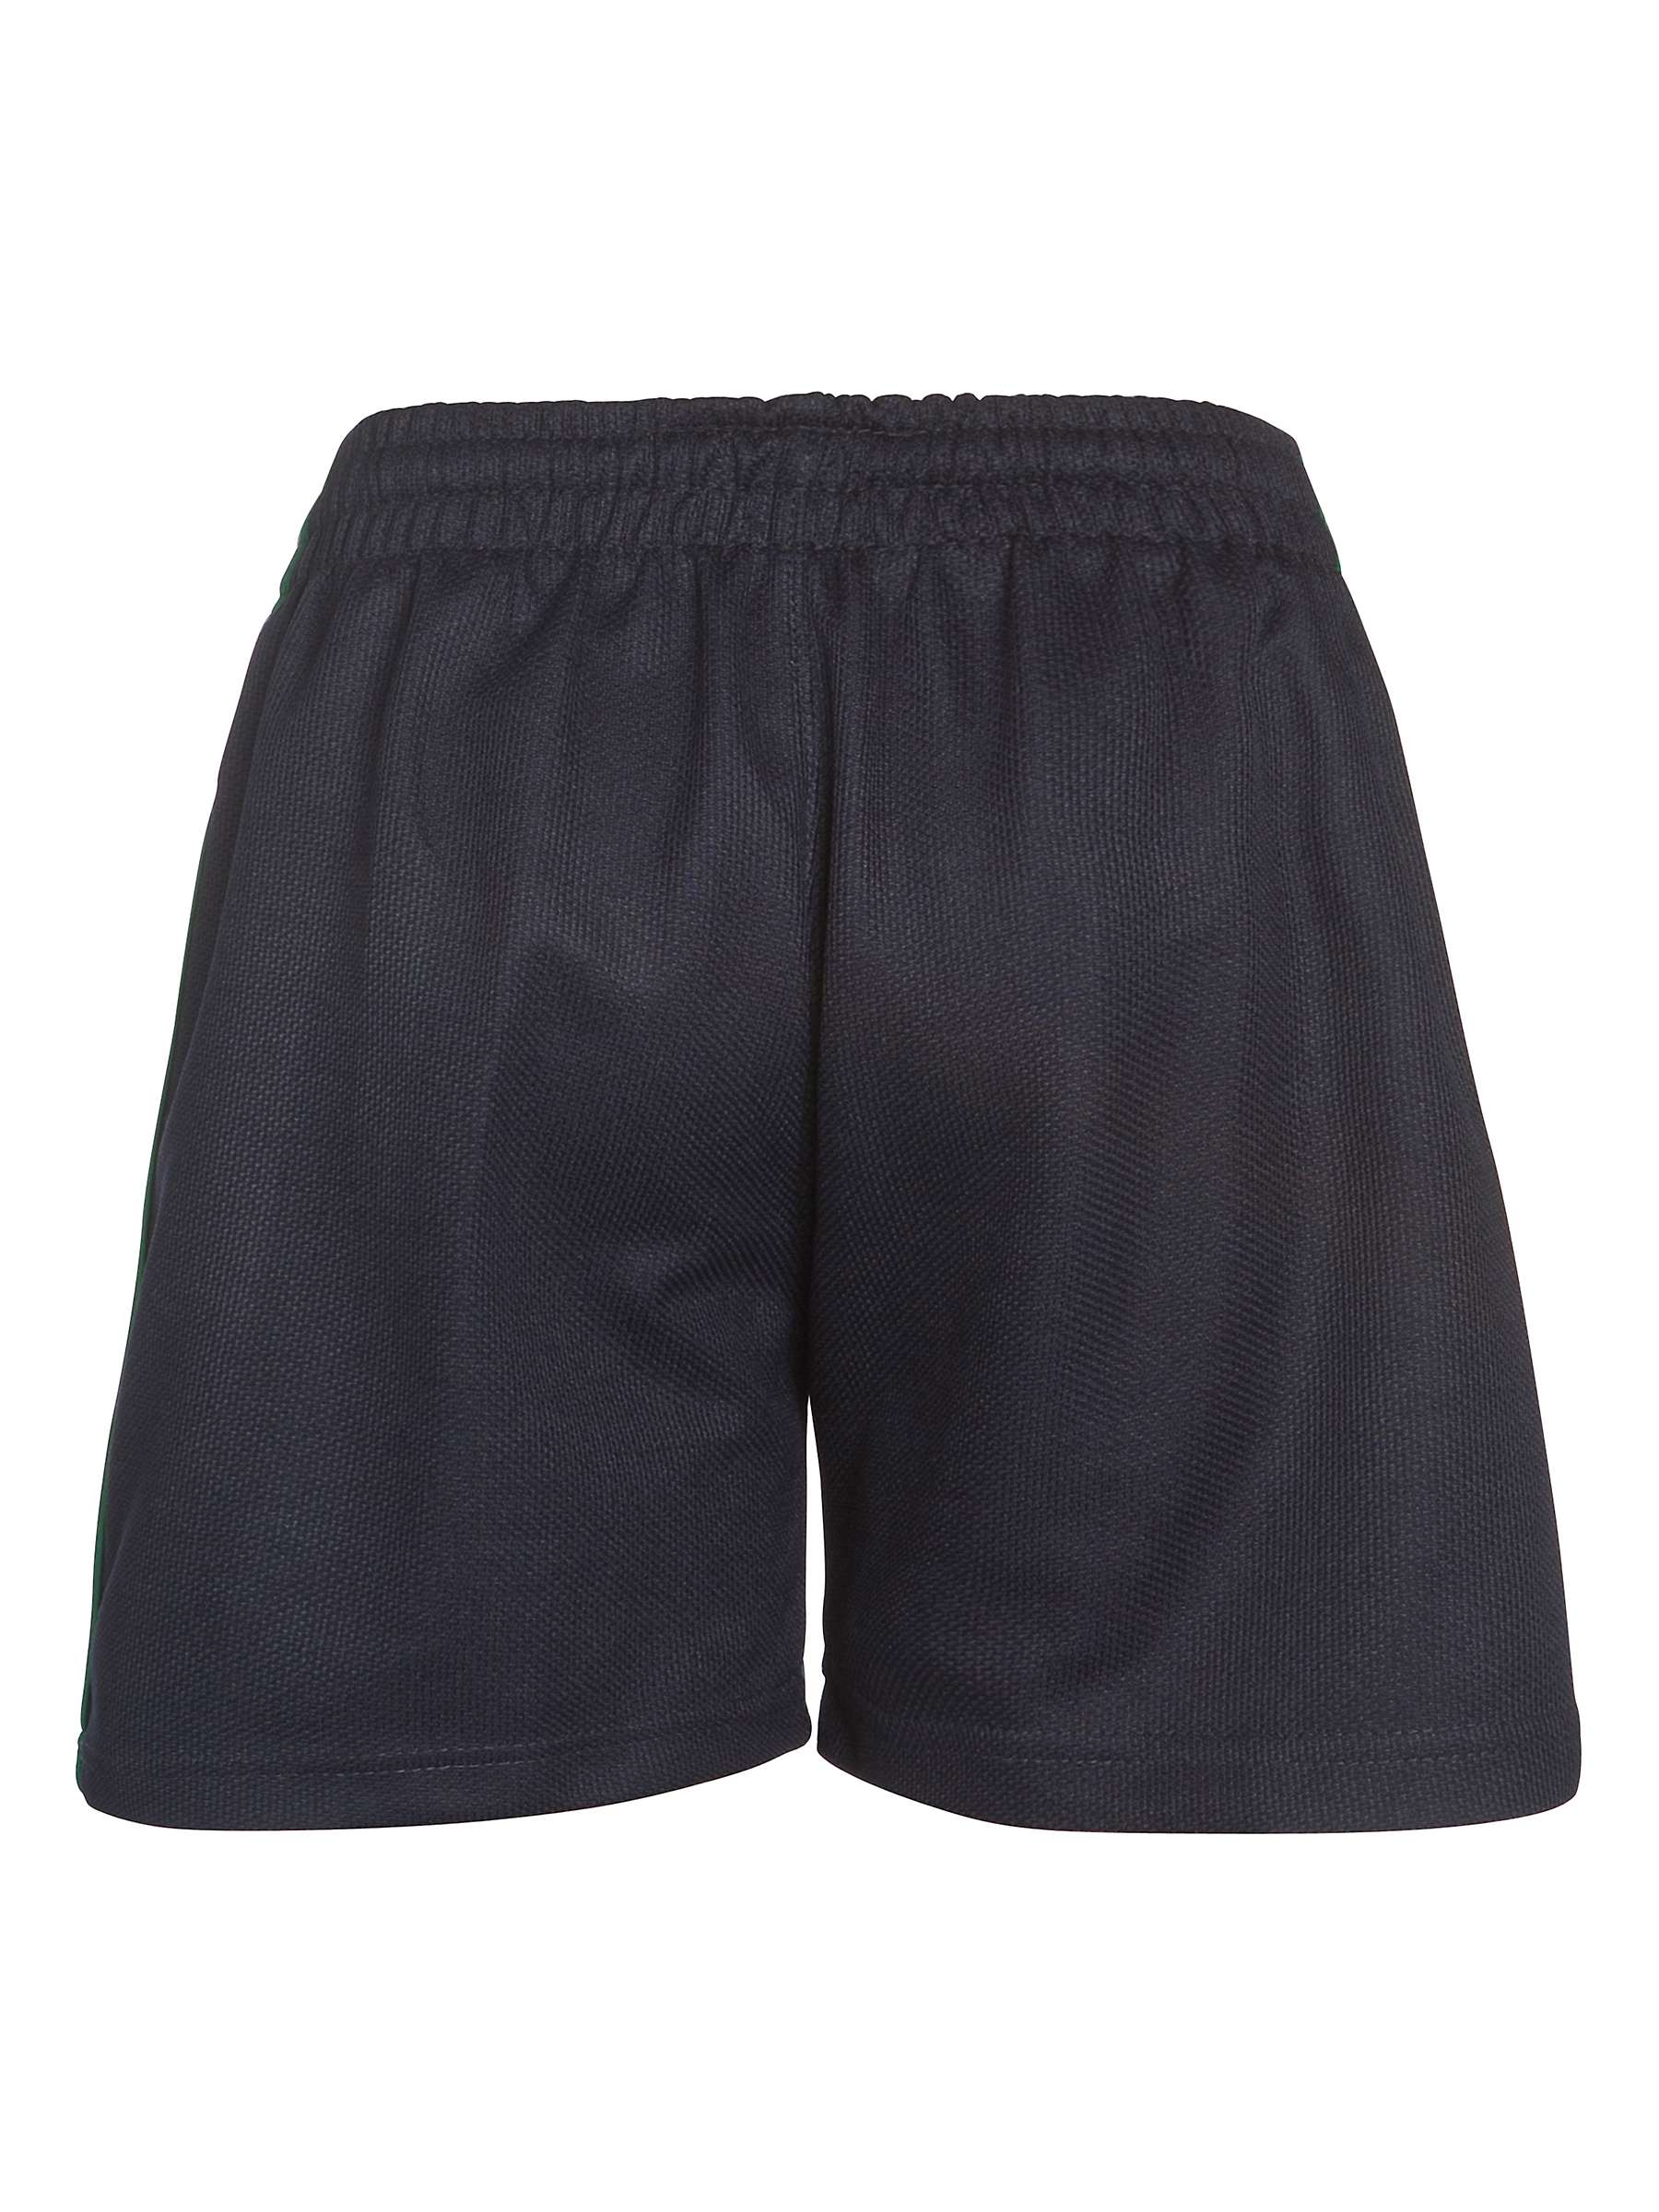 Buy Belvedere Academy Girls' PE Shorts, Navy/Multi Online at johnlewis.com